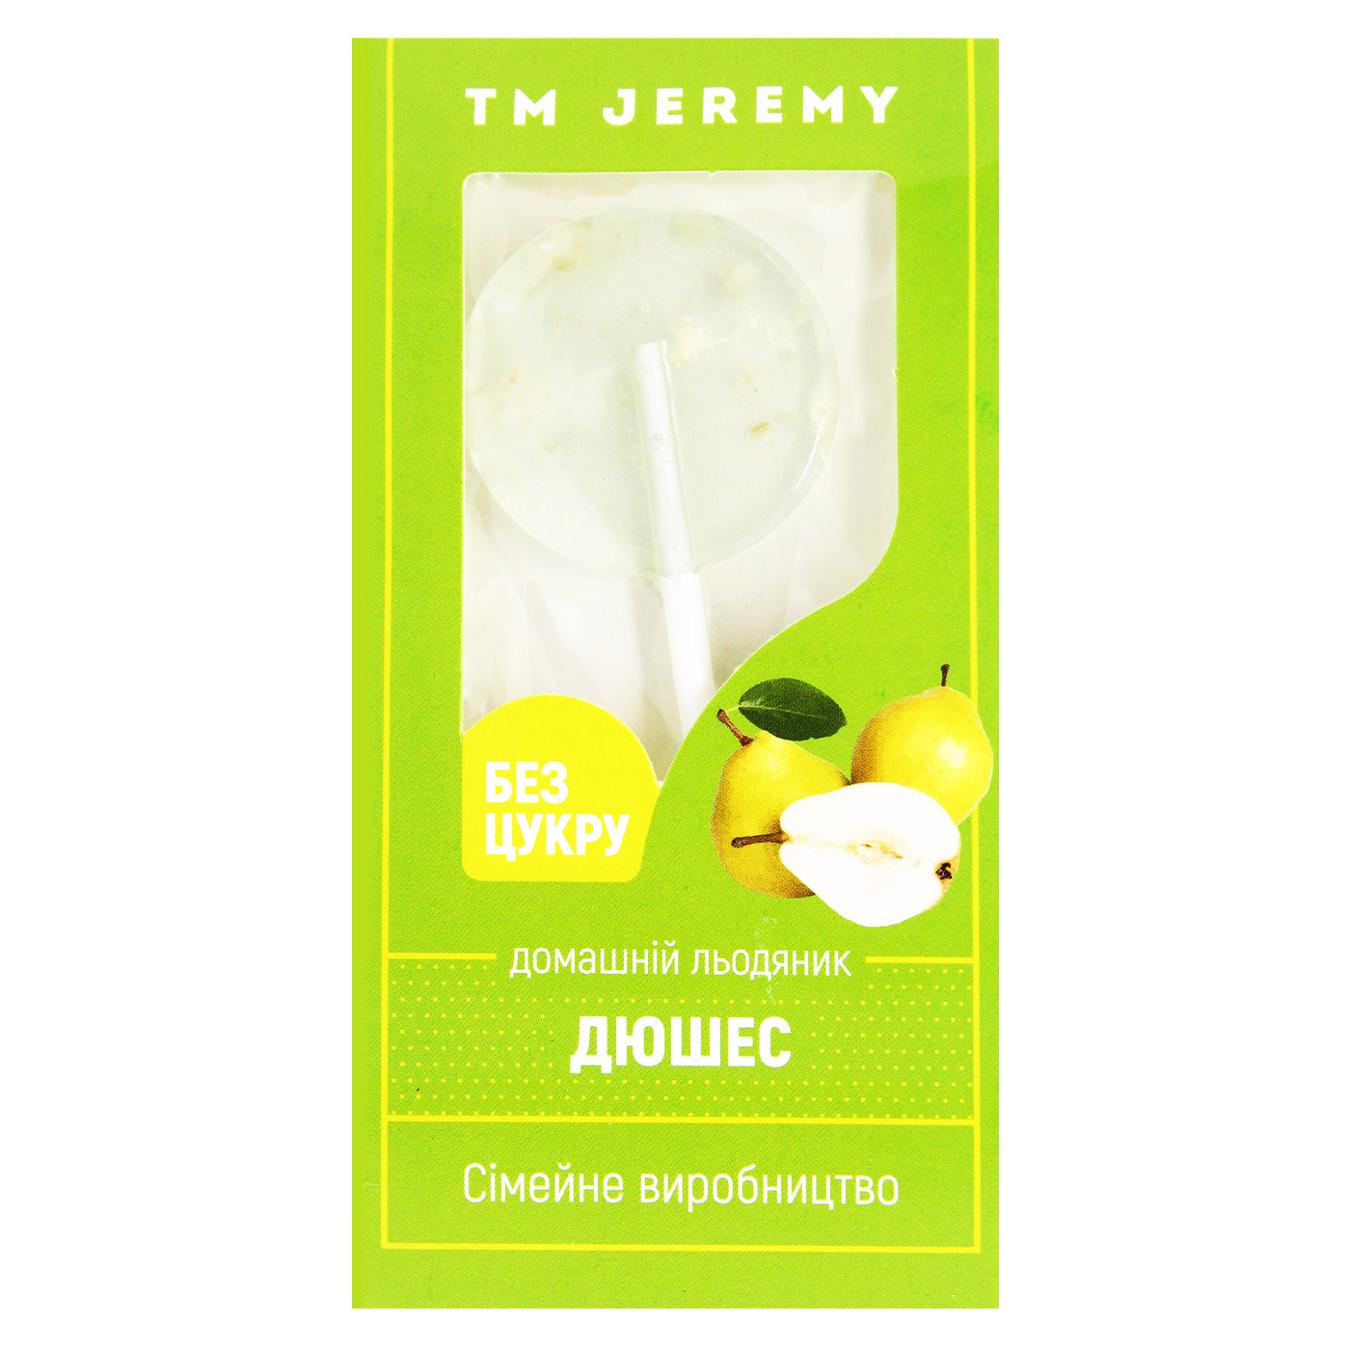 Lollipop Jeremy Duchess without sugar 10g